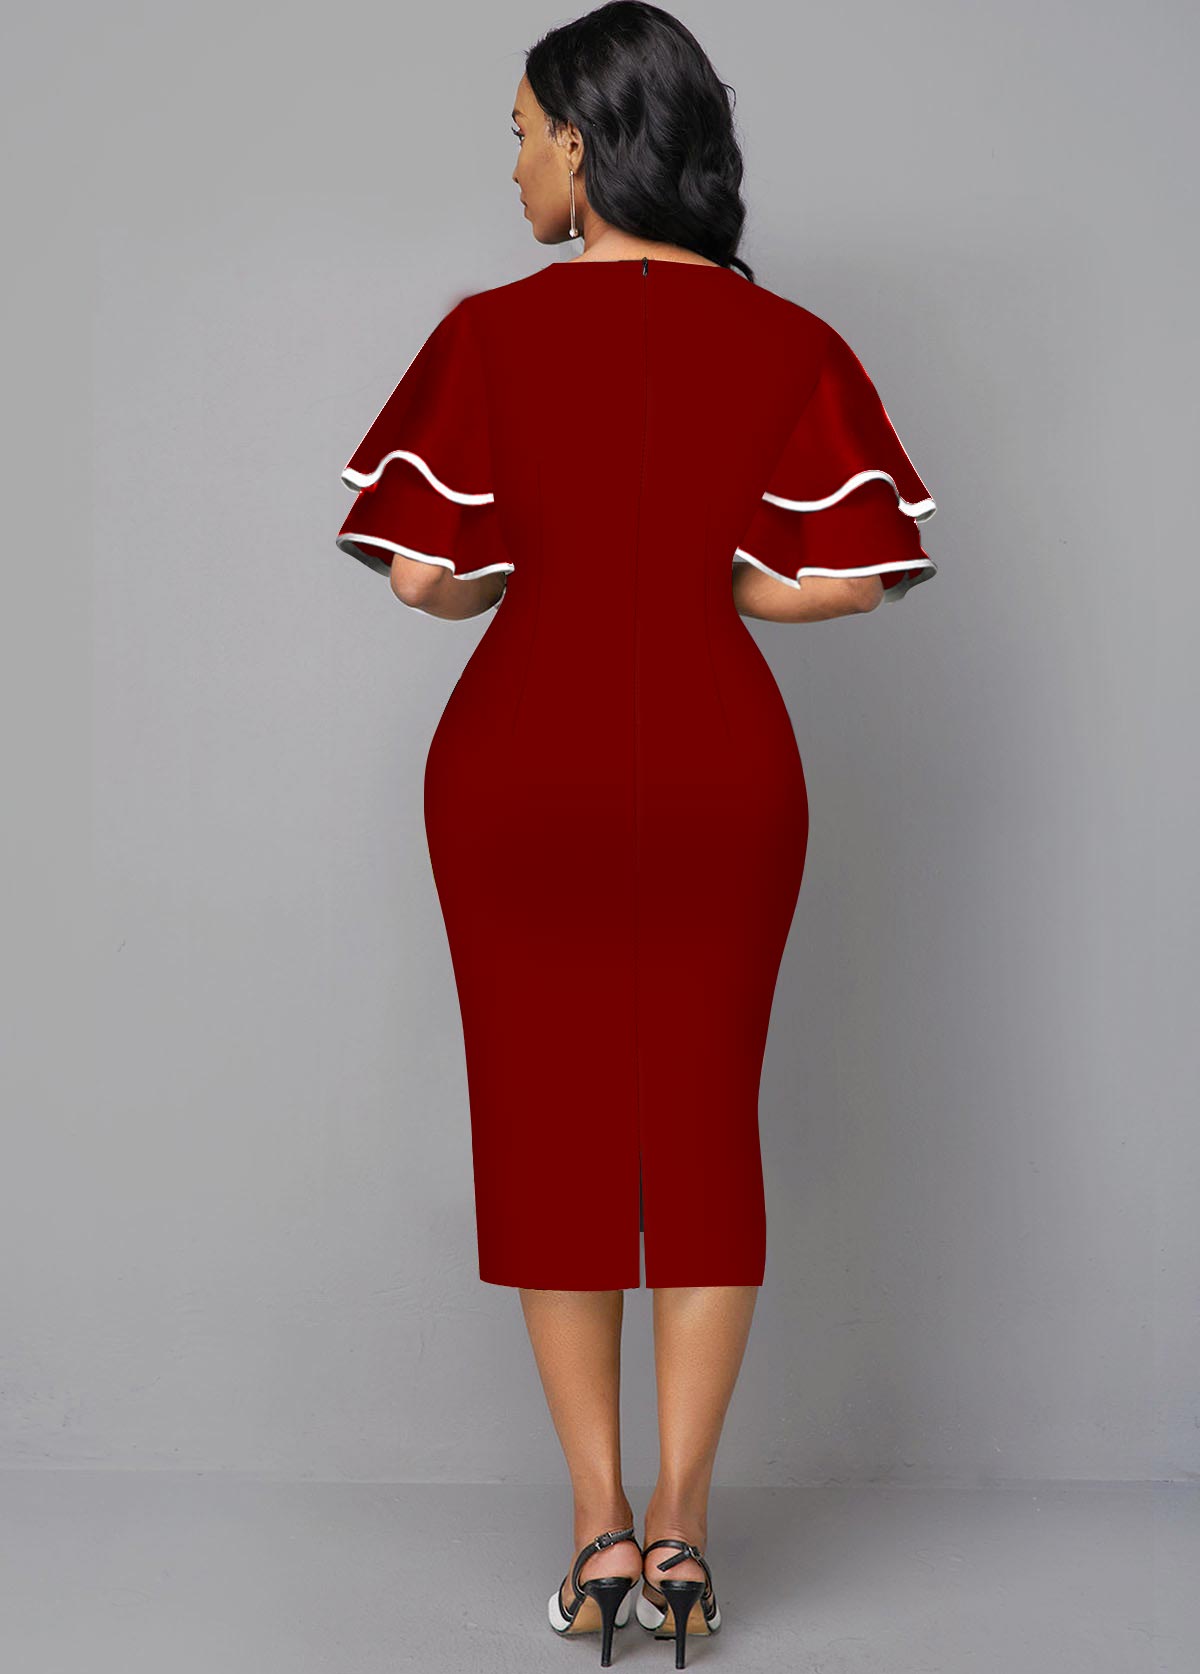 V Neck Geometric Print Layered Bell Sleeve Red Dress